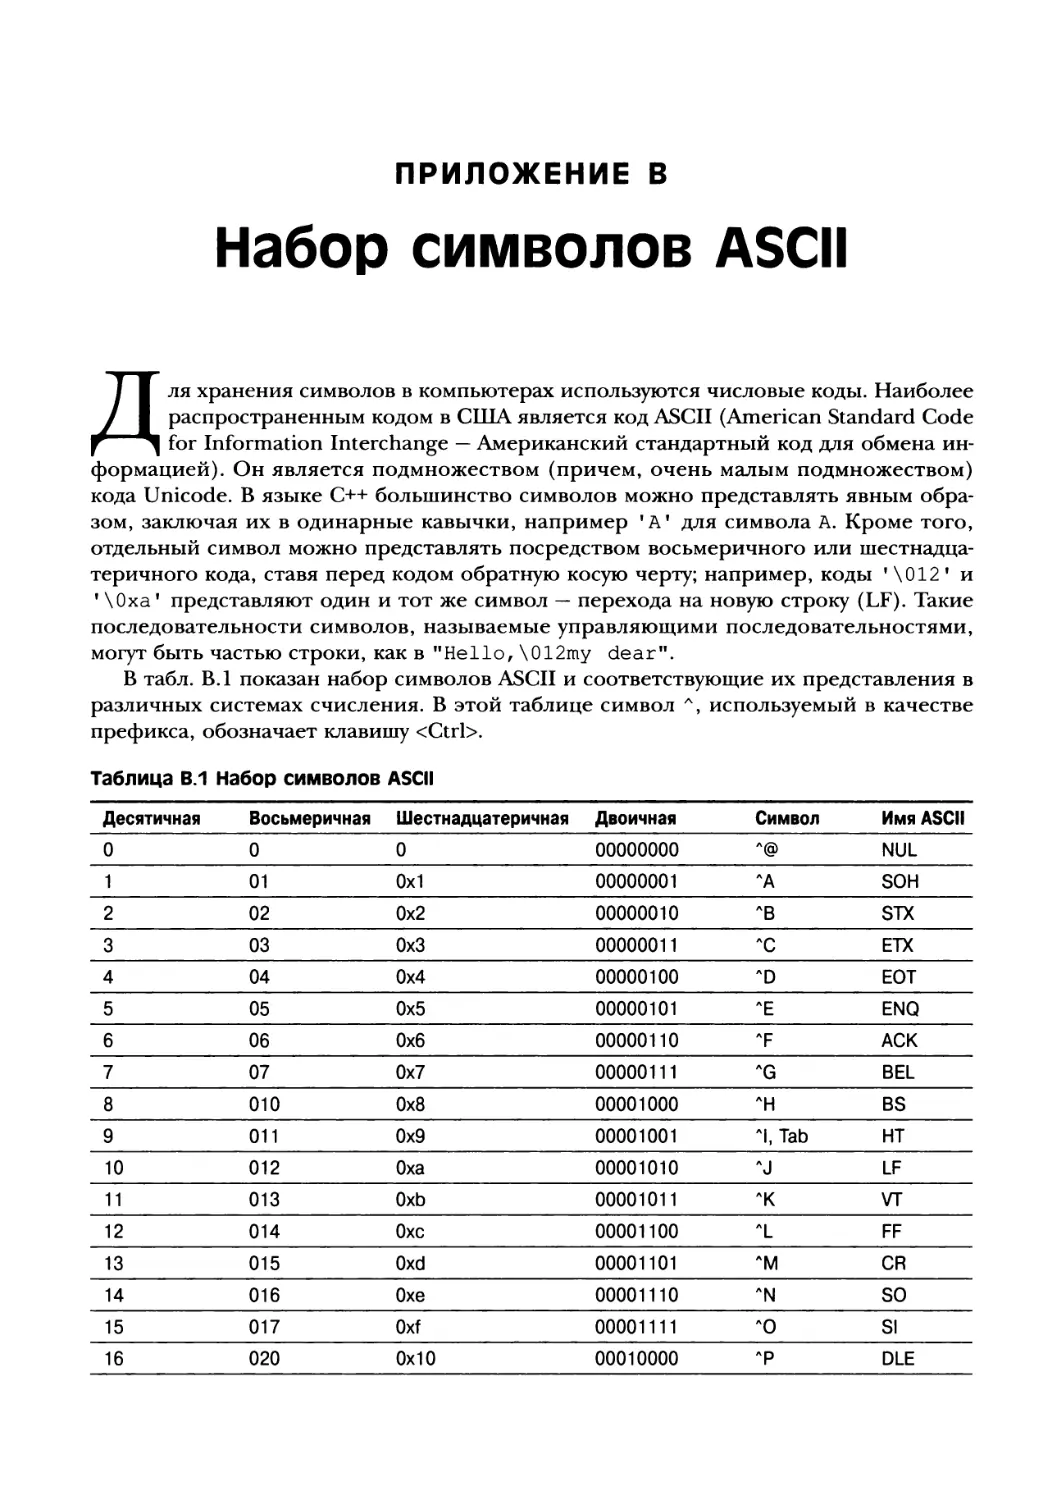 Приложение В. Набор символов ASCII